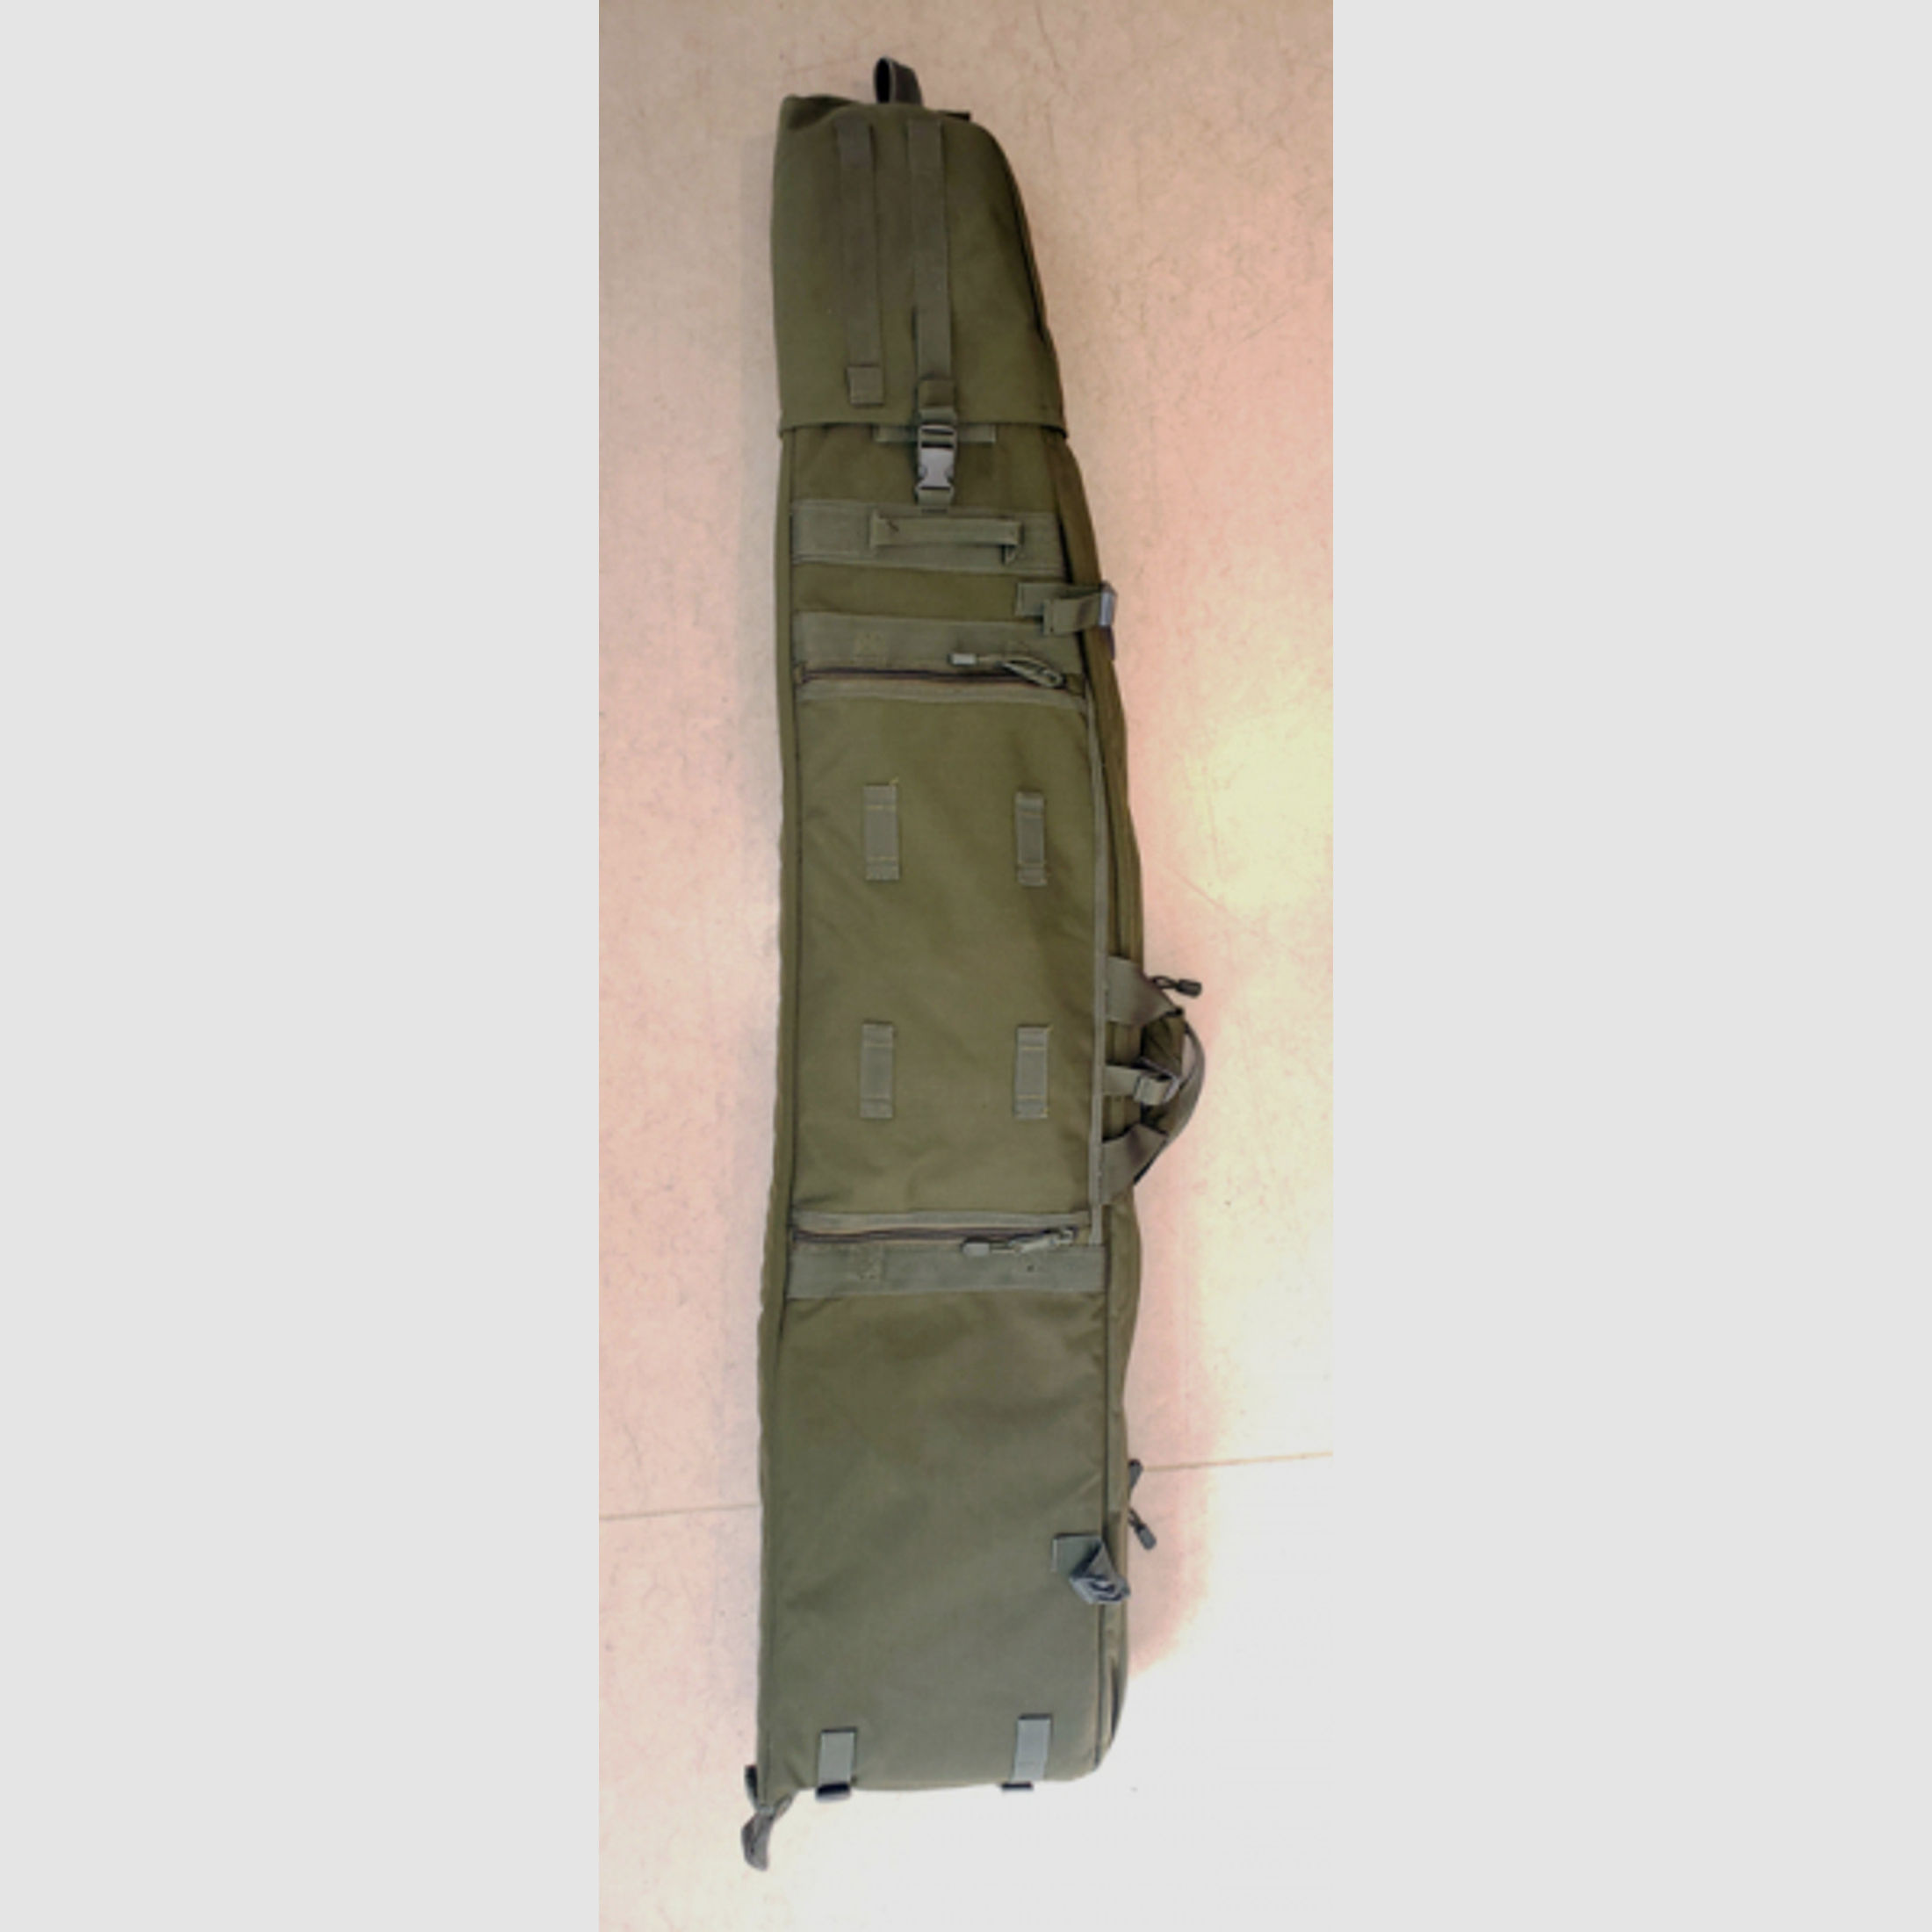 AIM 50 Tactical Drag Bag oliv grün original Gewehr Tasche Koffer Futteral UK